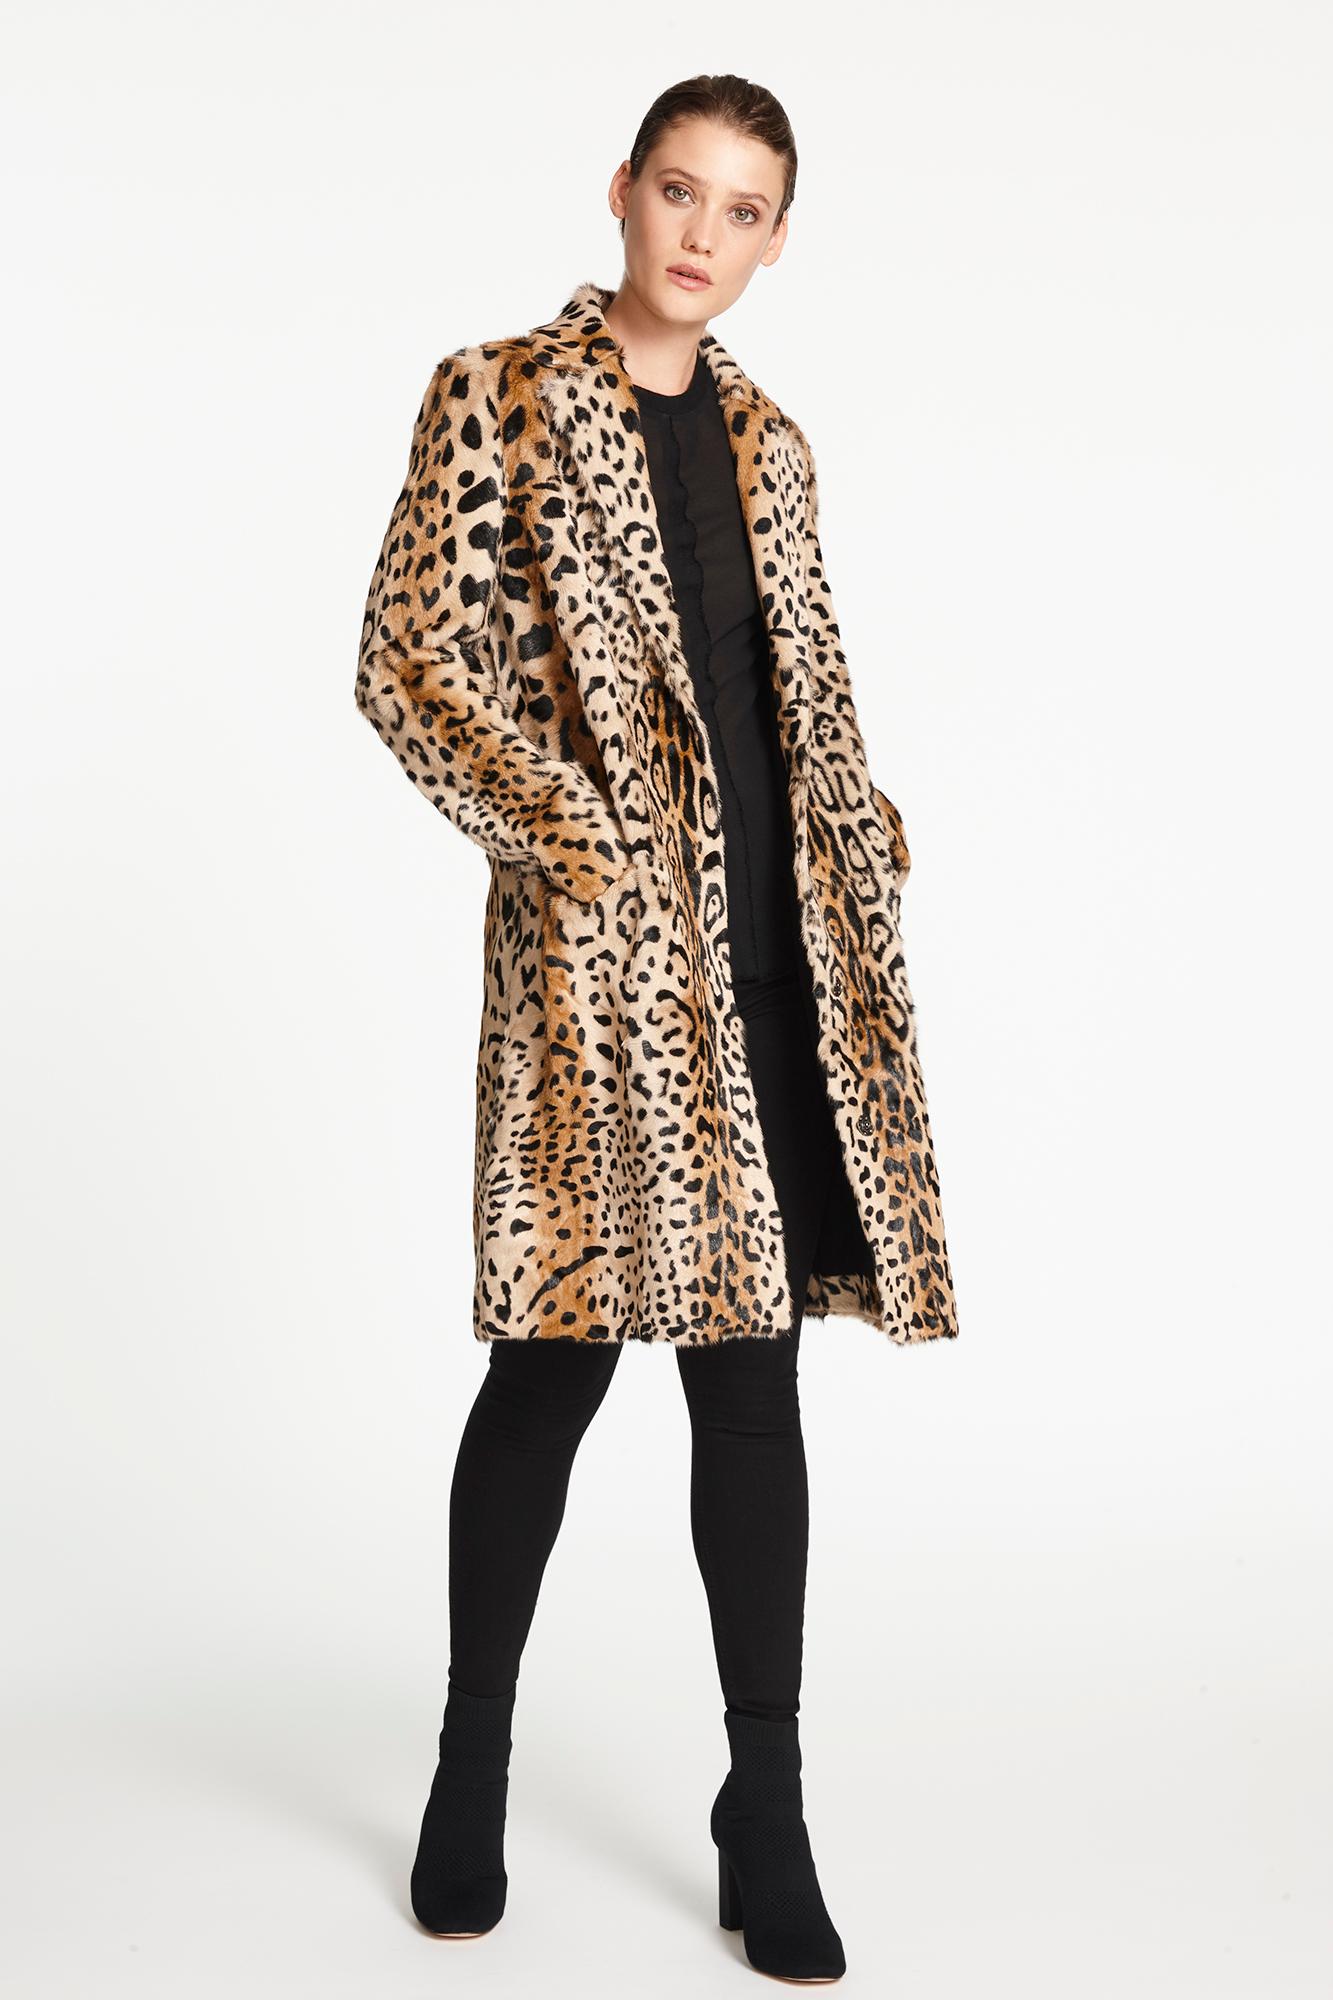 Verheyen London Leopard Print Coat in Natural Goat Hair Fur Size 8-10 2